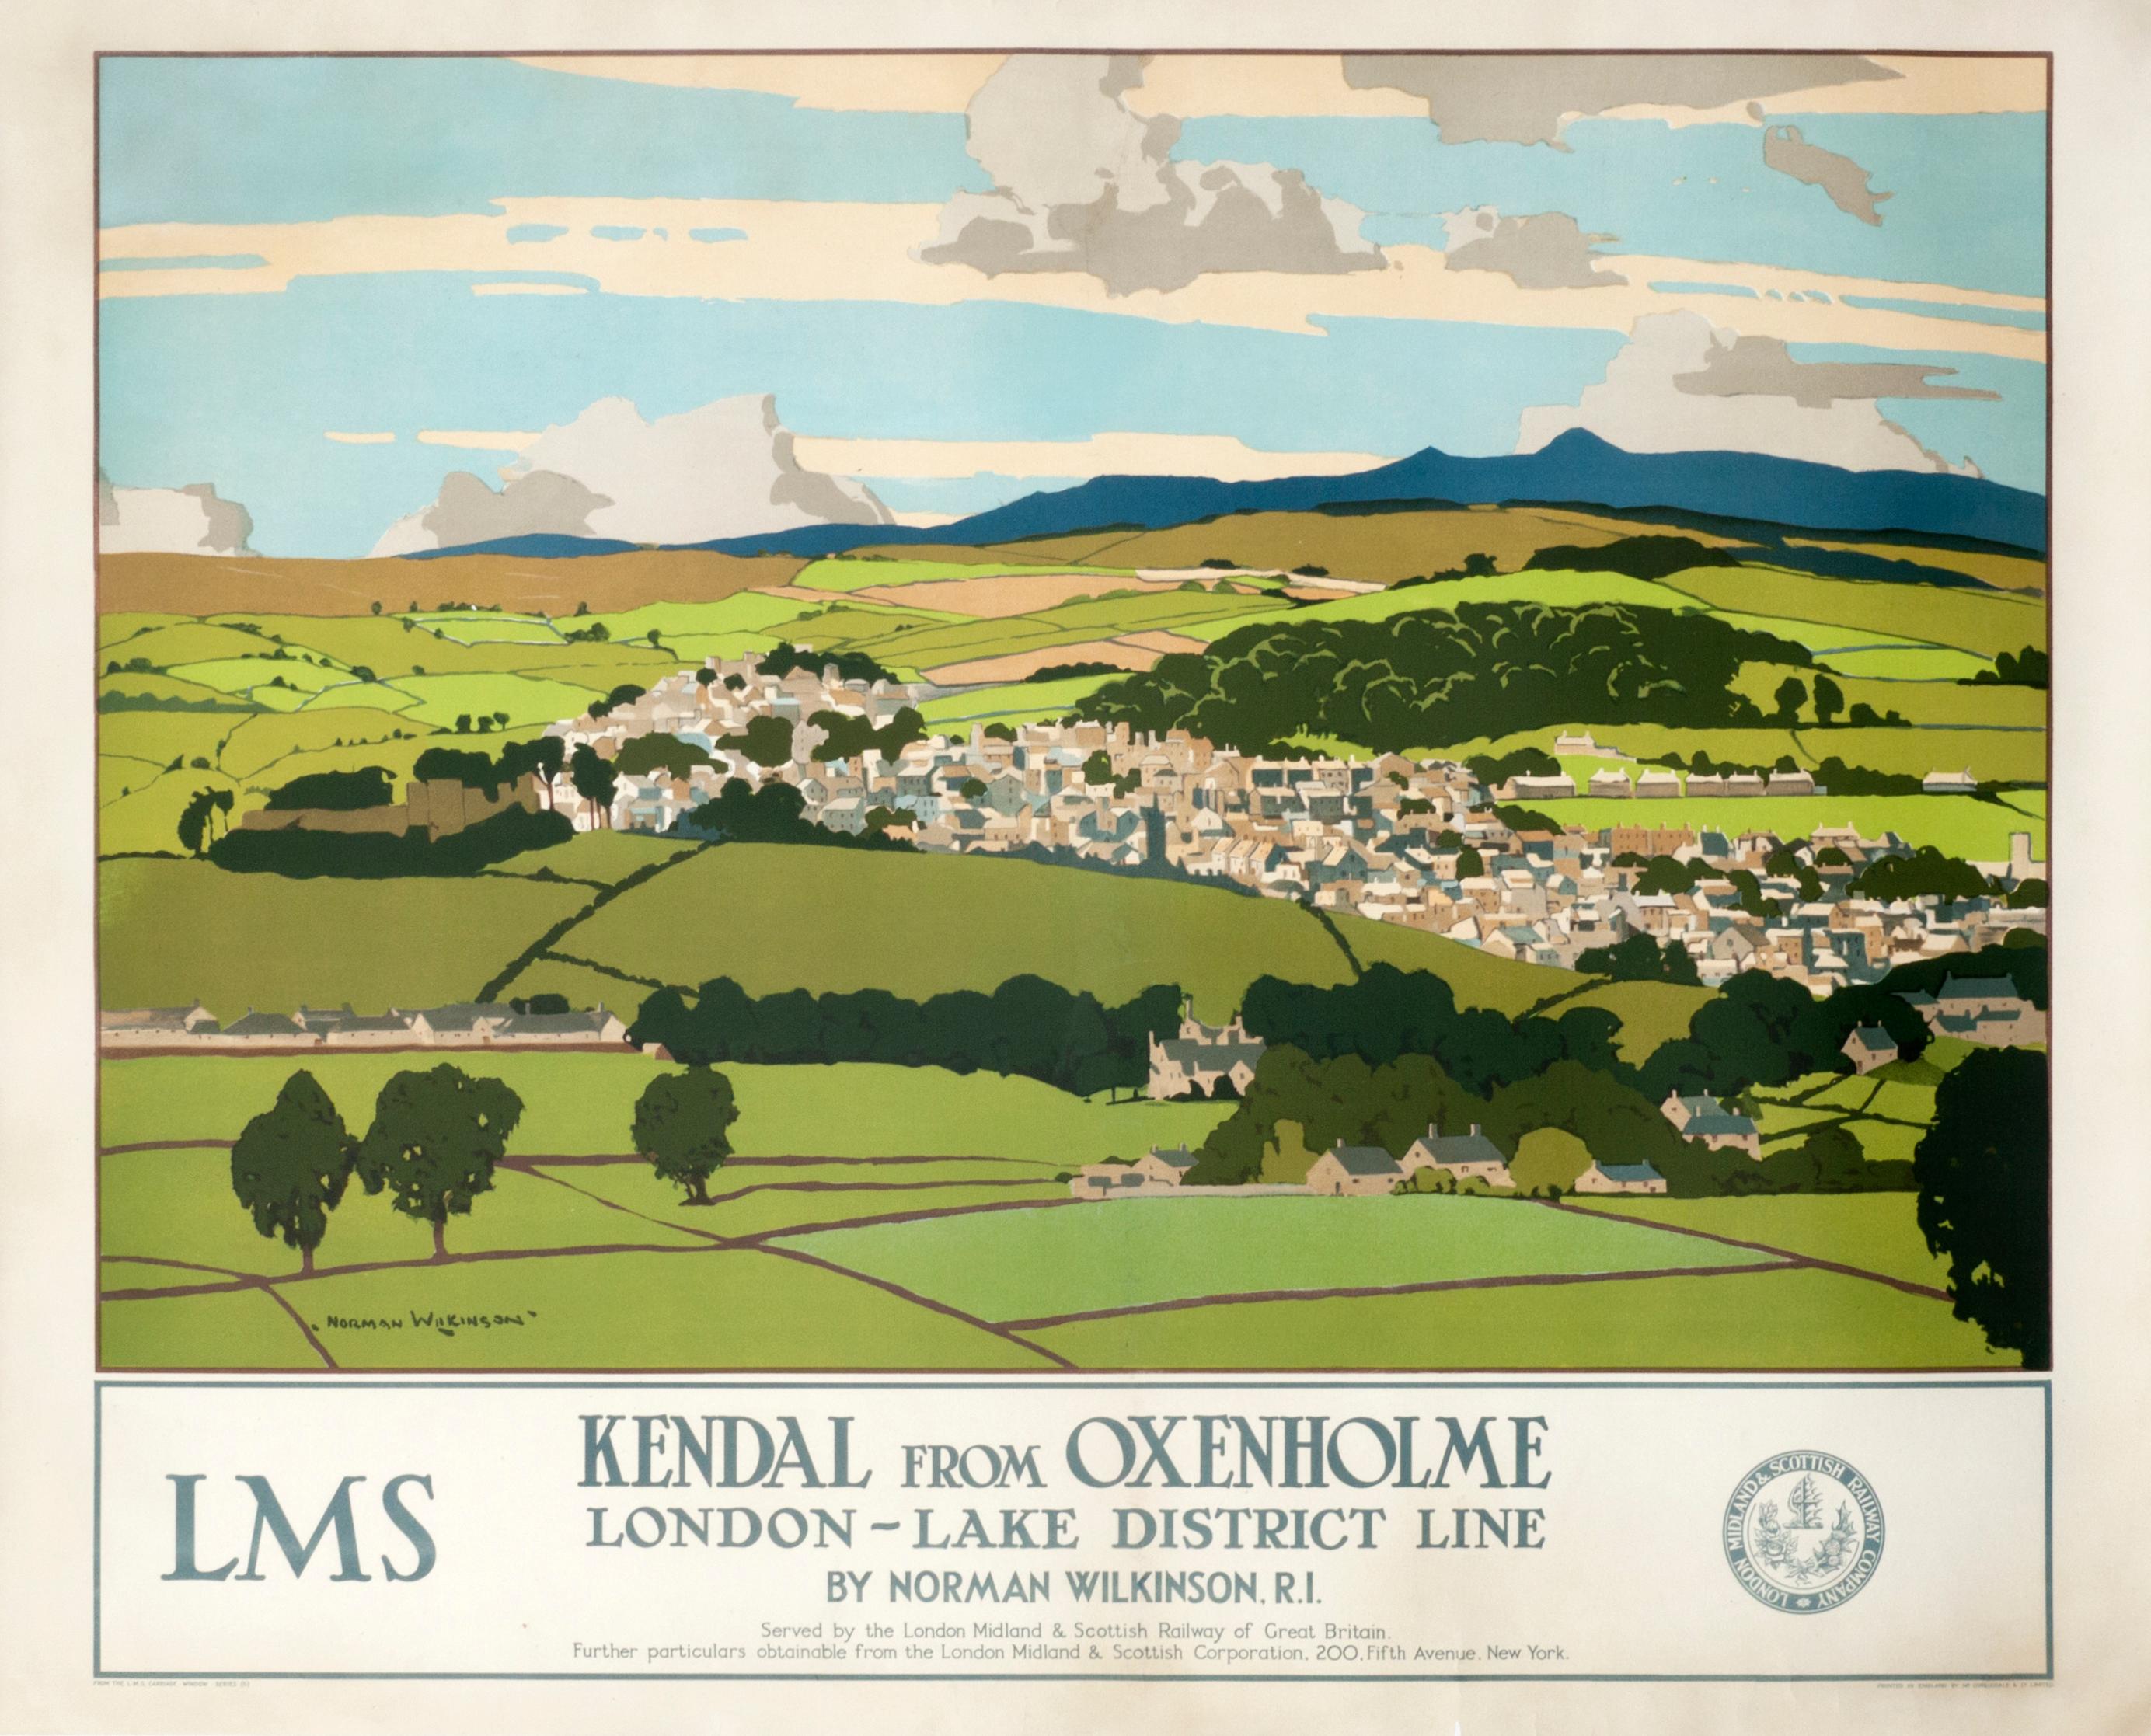 Norman Wilkinson CBE PRI Landscape Print - "Kendal from Oxenholme - LMS" British Rail Landscape Original Vintage Poster